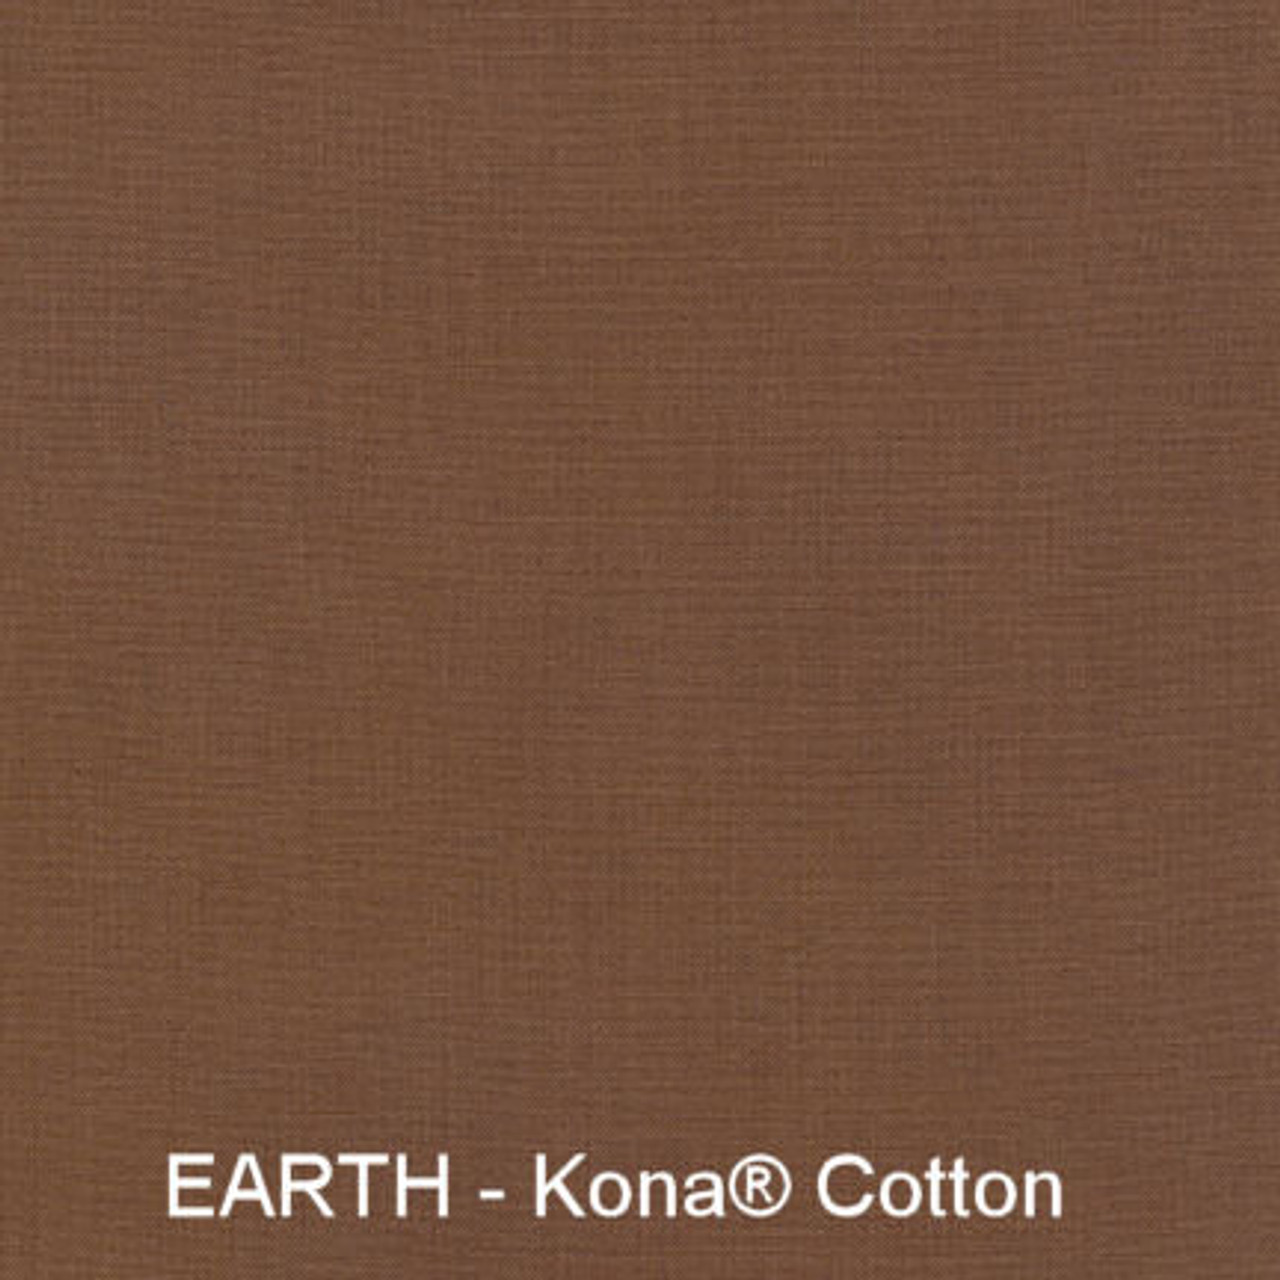 Woven Kona Cotton Doll Skin Fabric